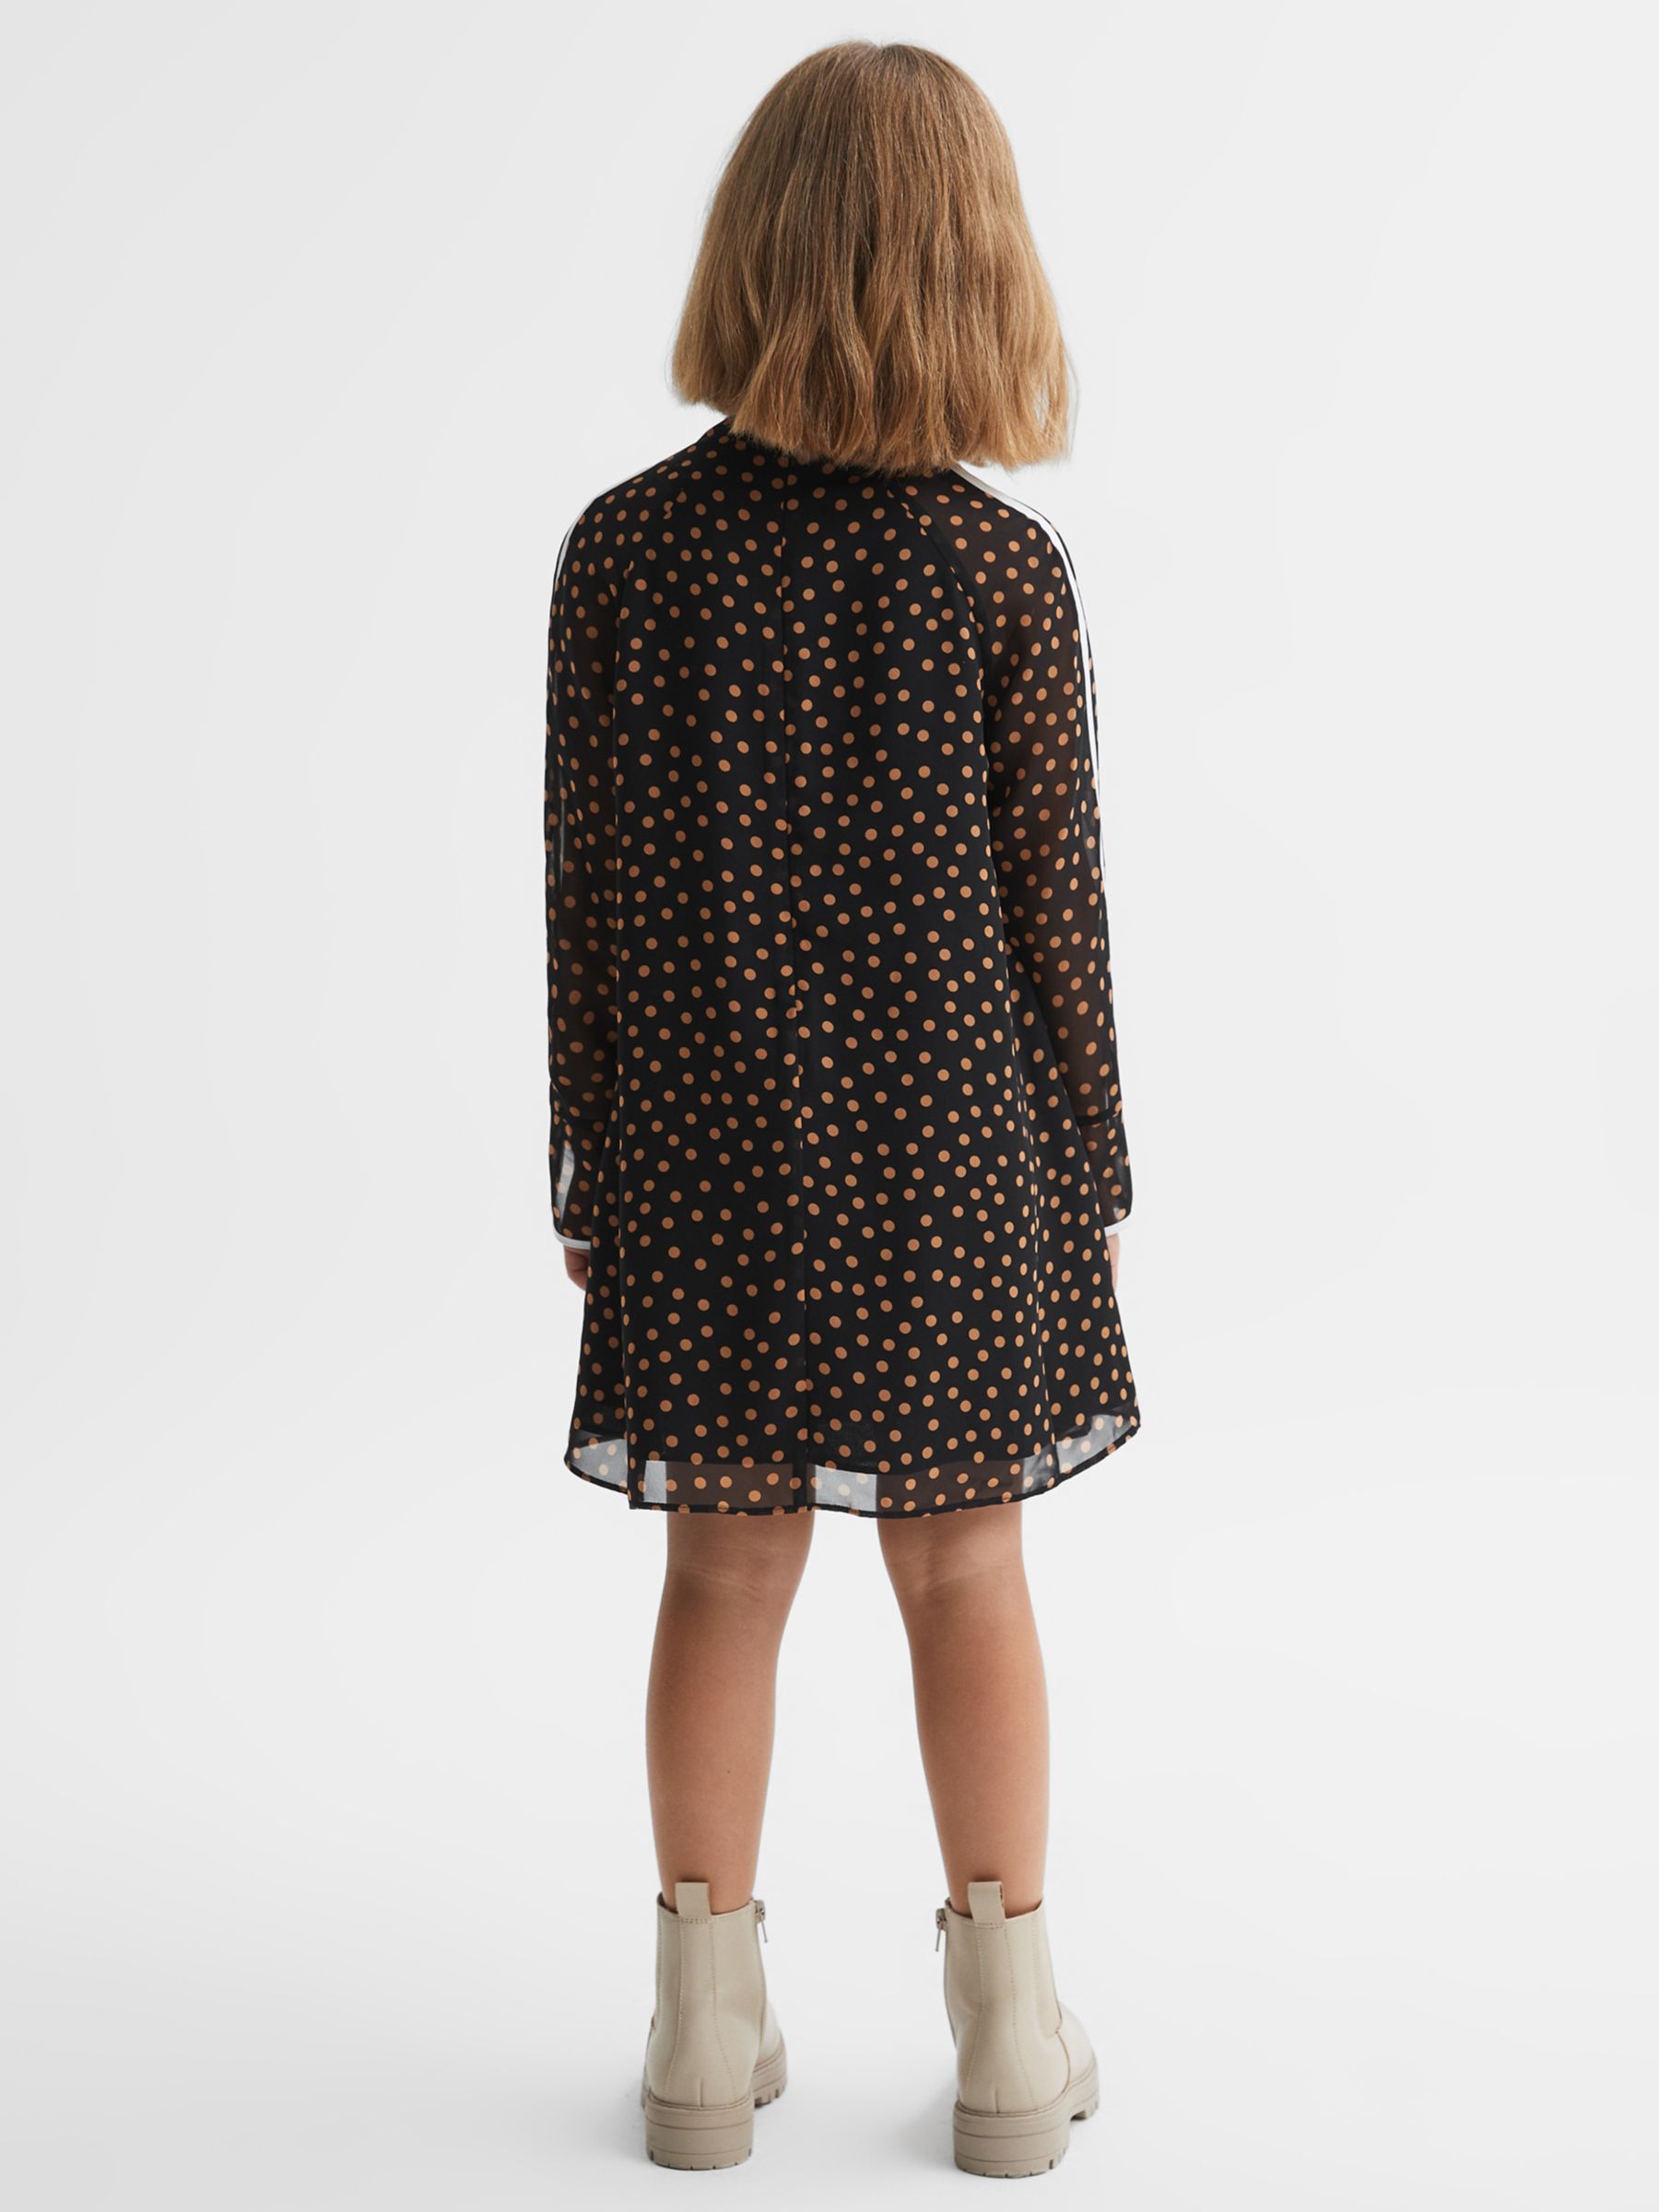 Reiss Kids' Kate Spot Dress, Black/Multi, 5-6 years